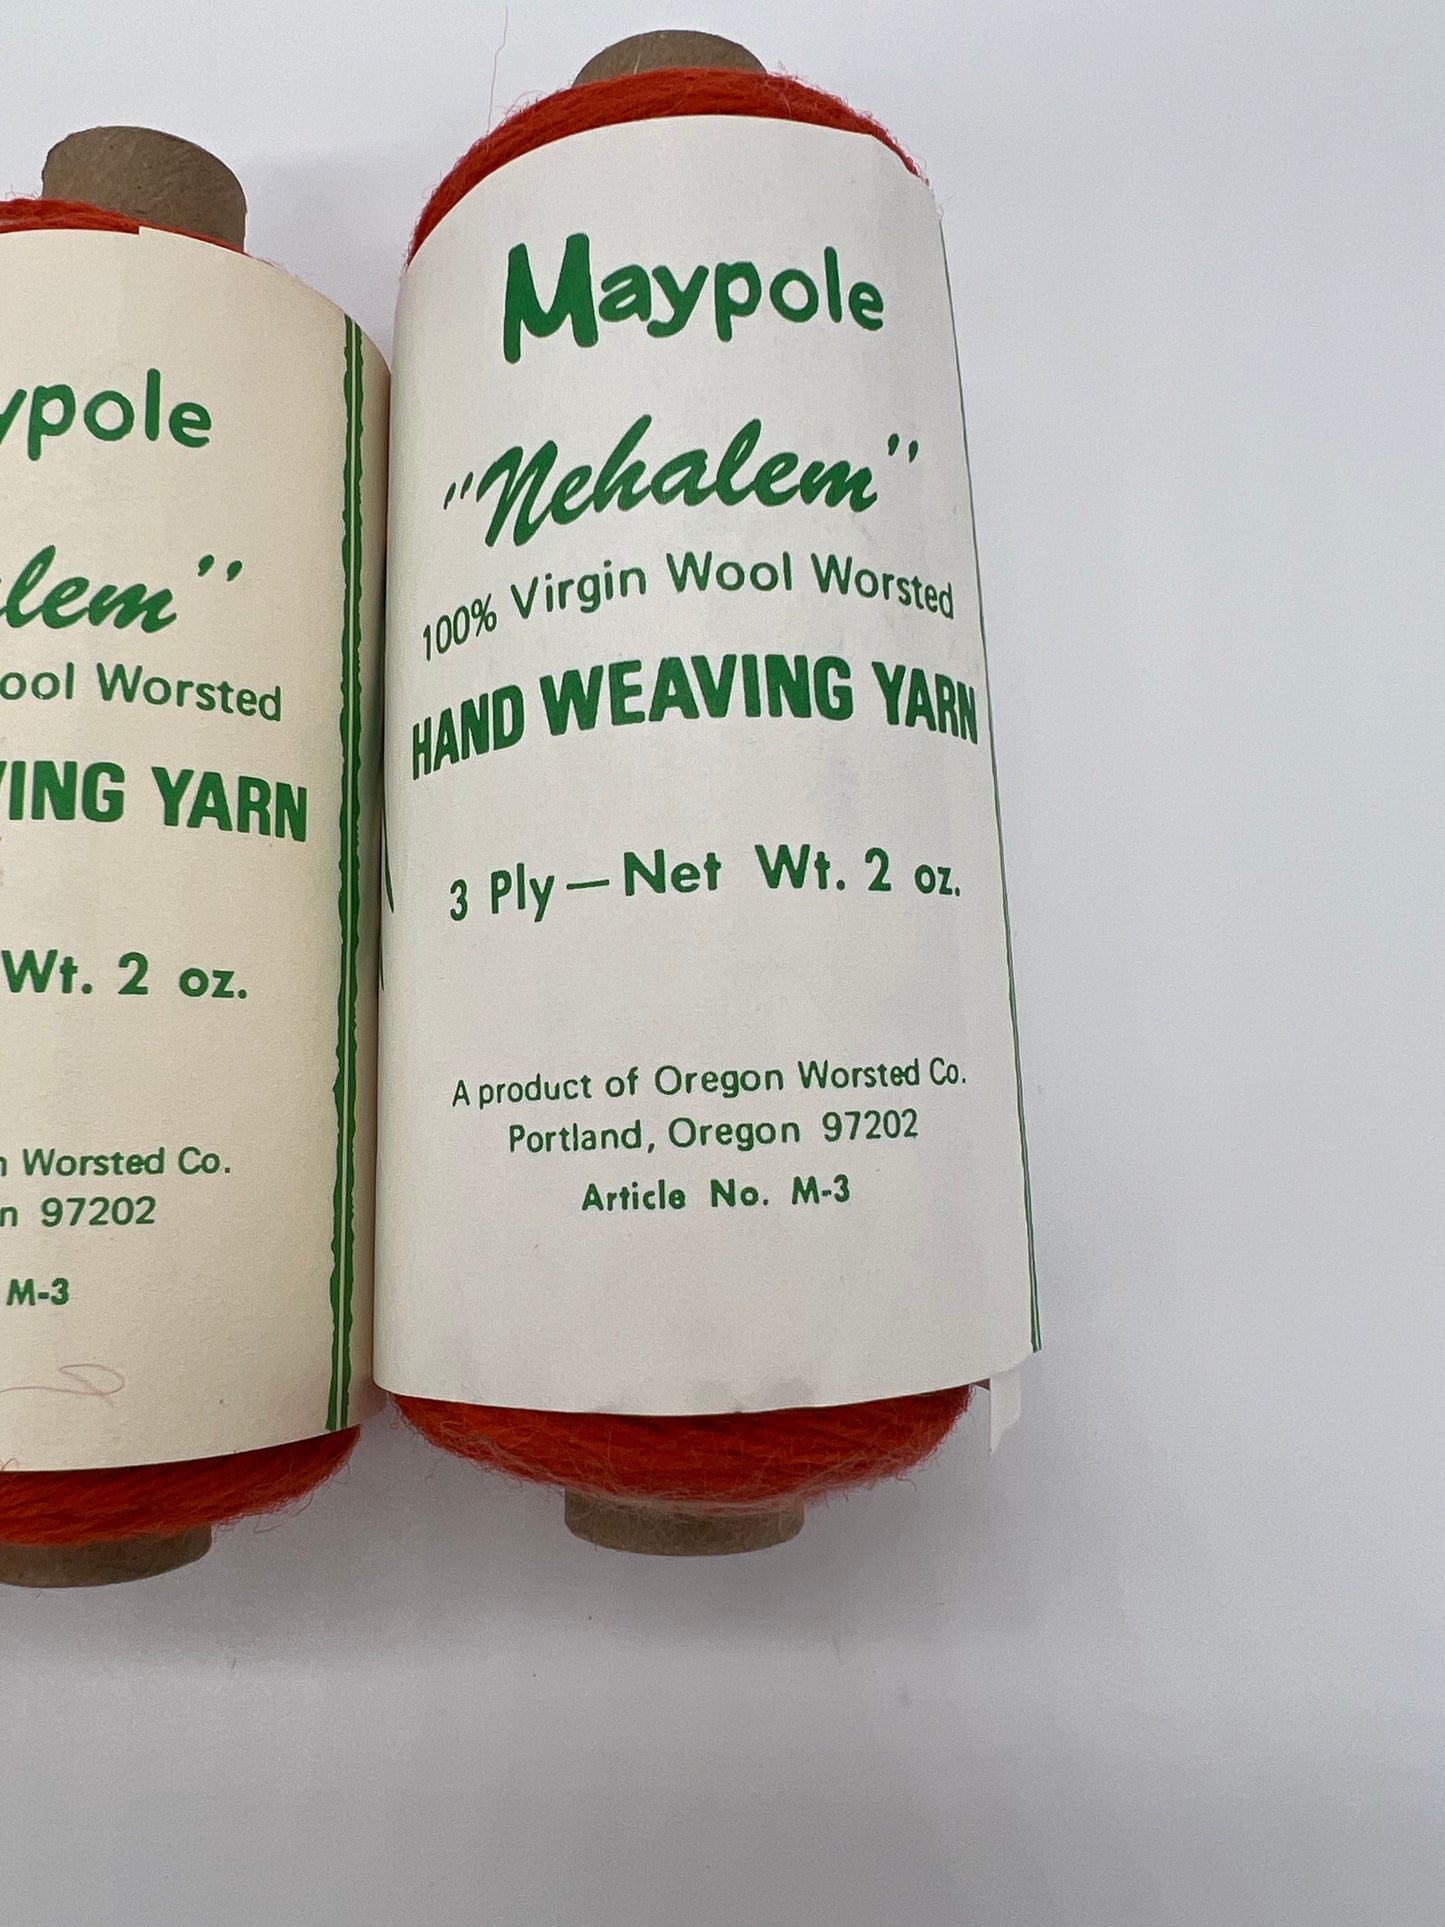 Maypole Nehalem Bright Red Yarn